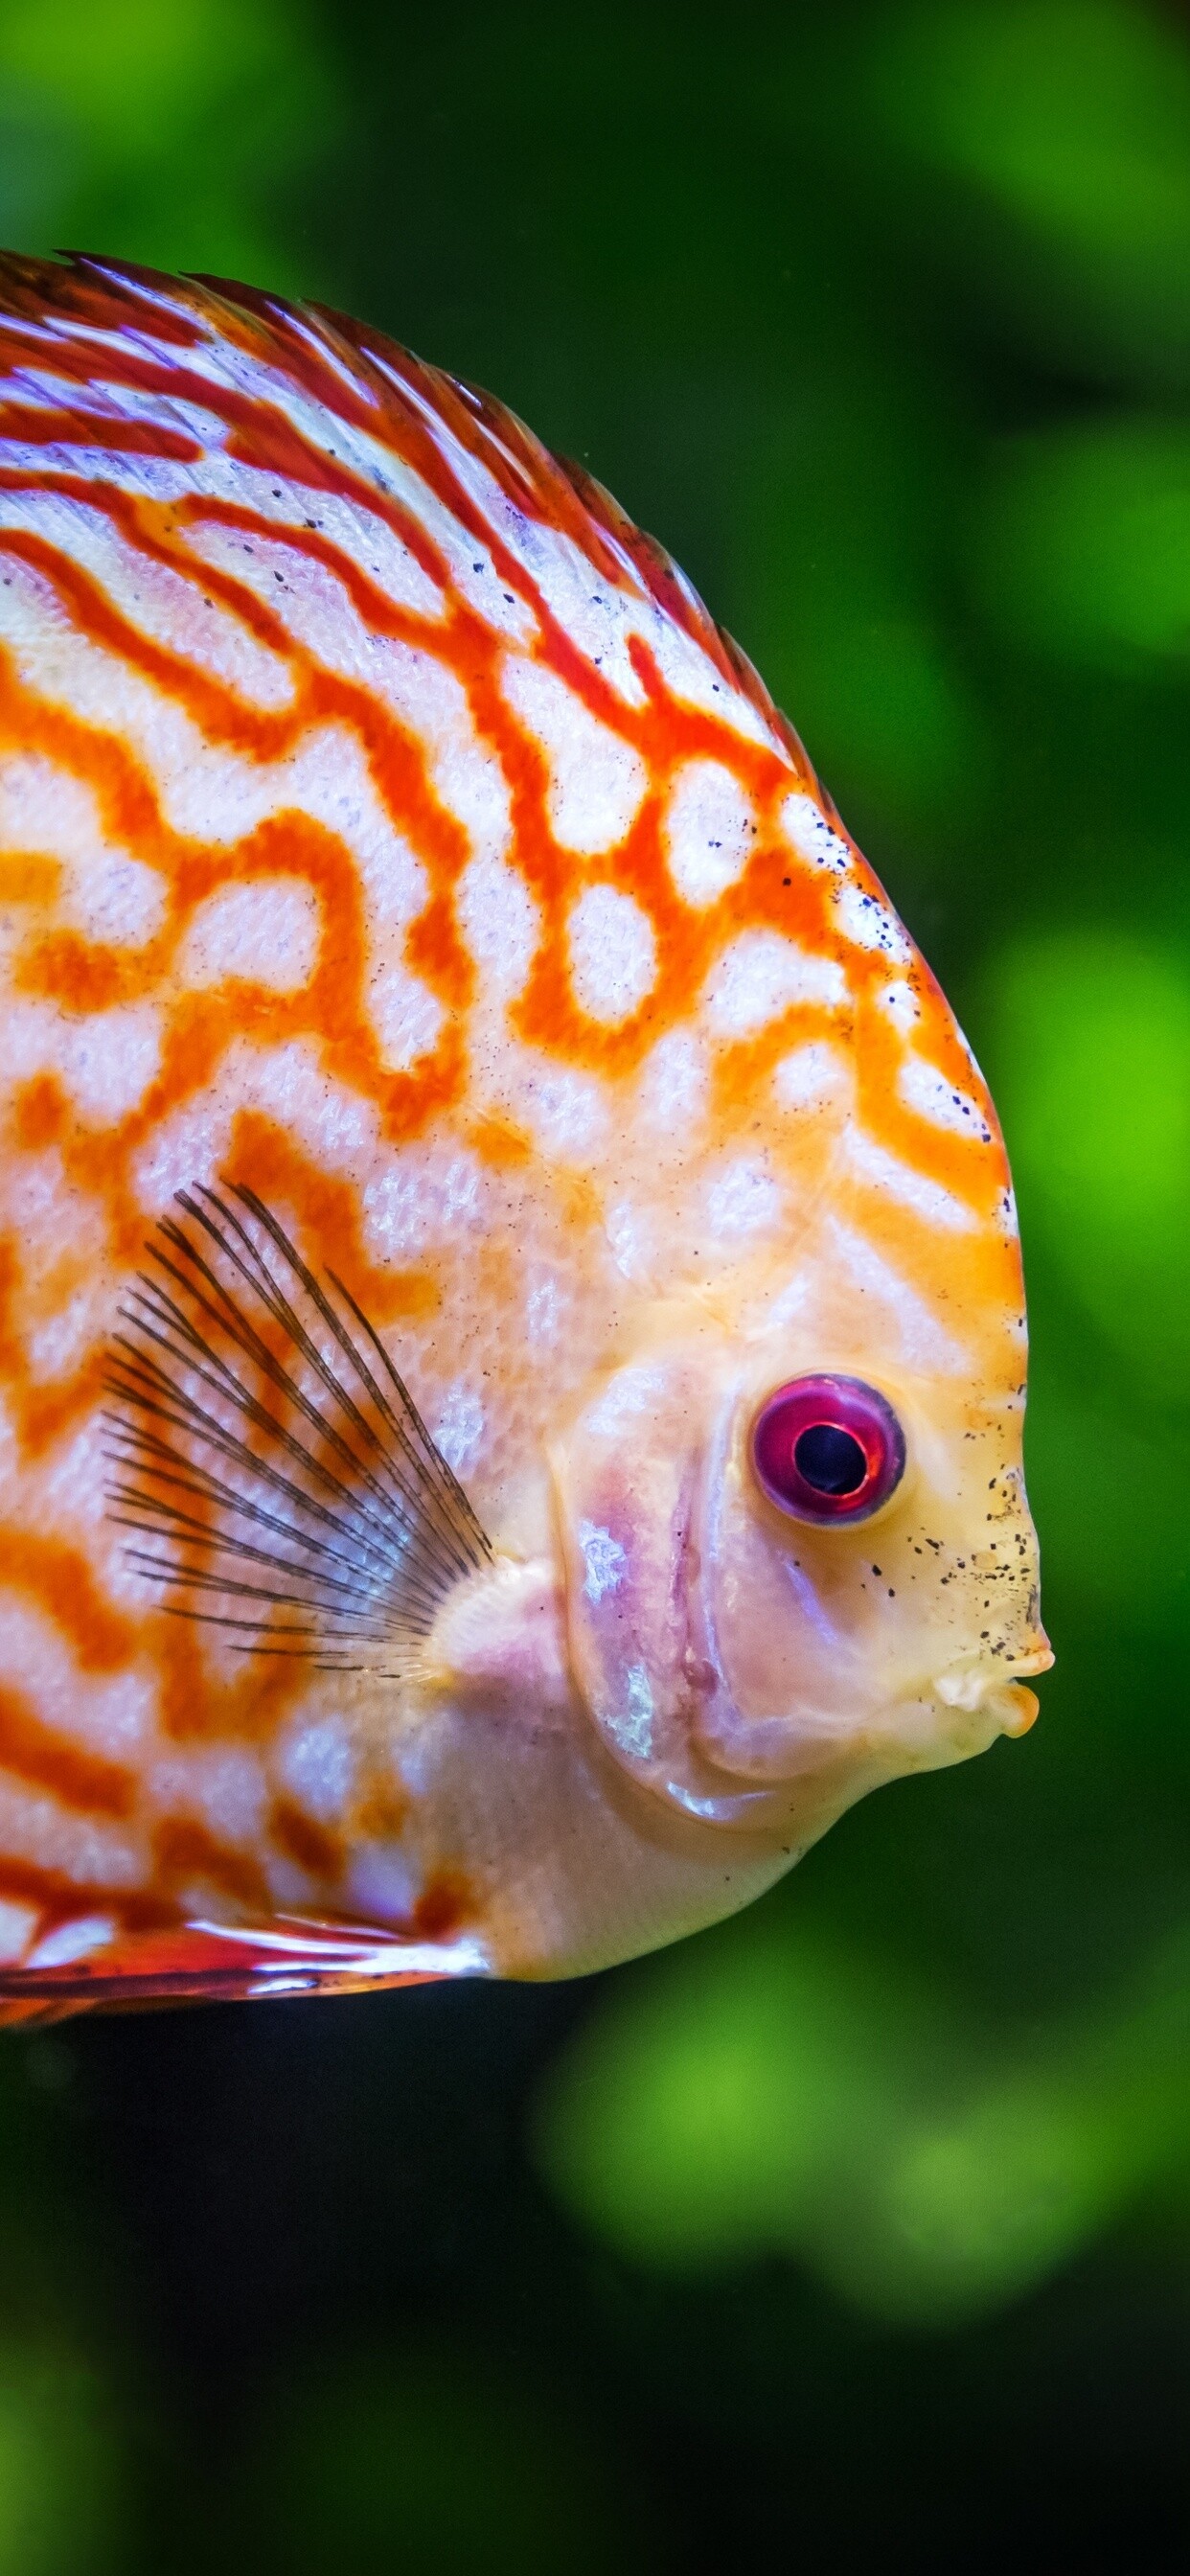 Discus fish, 5k iPhone XS Max, Vibrant aquatic life, HD 4k wallpapers, 1250x2690 HD Phone